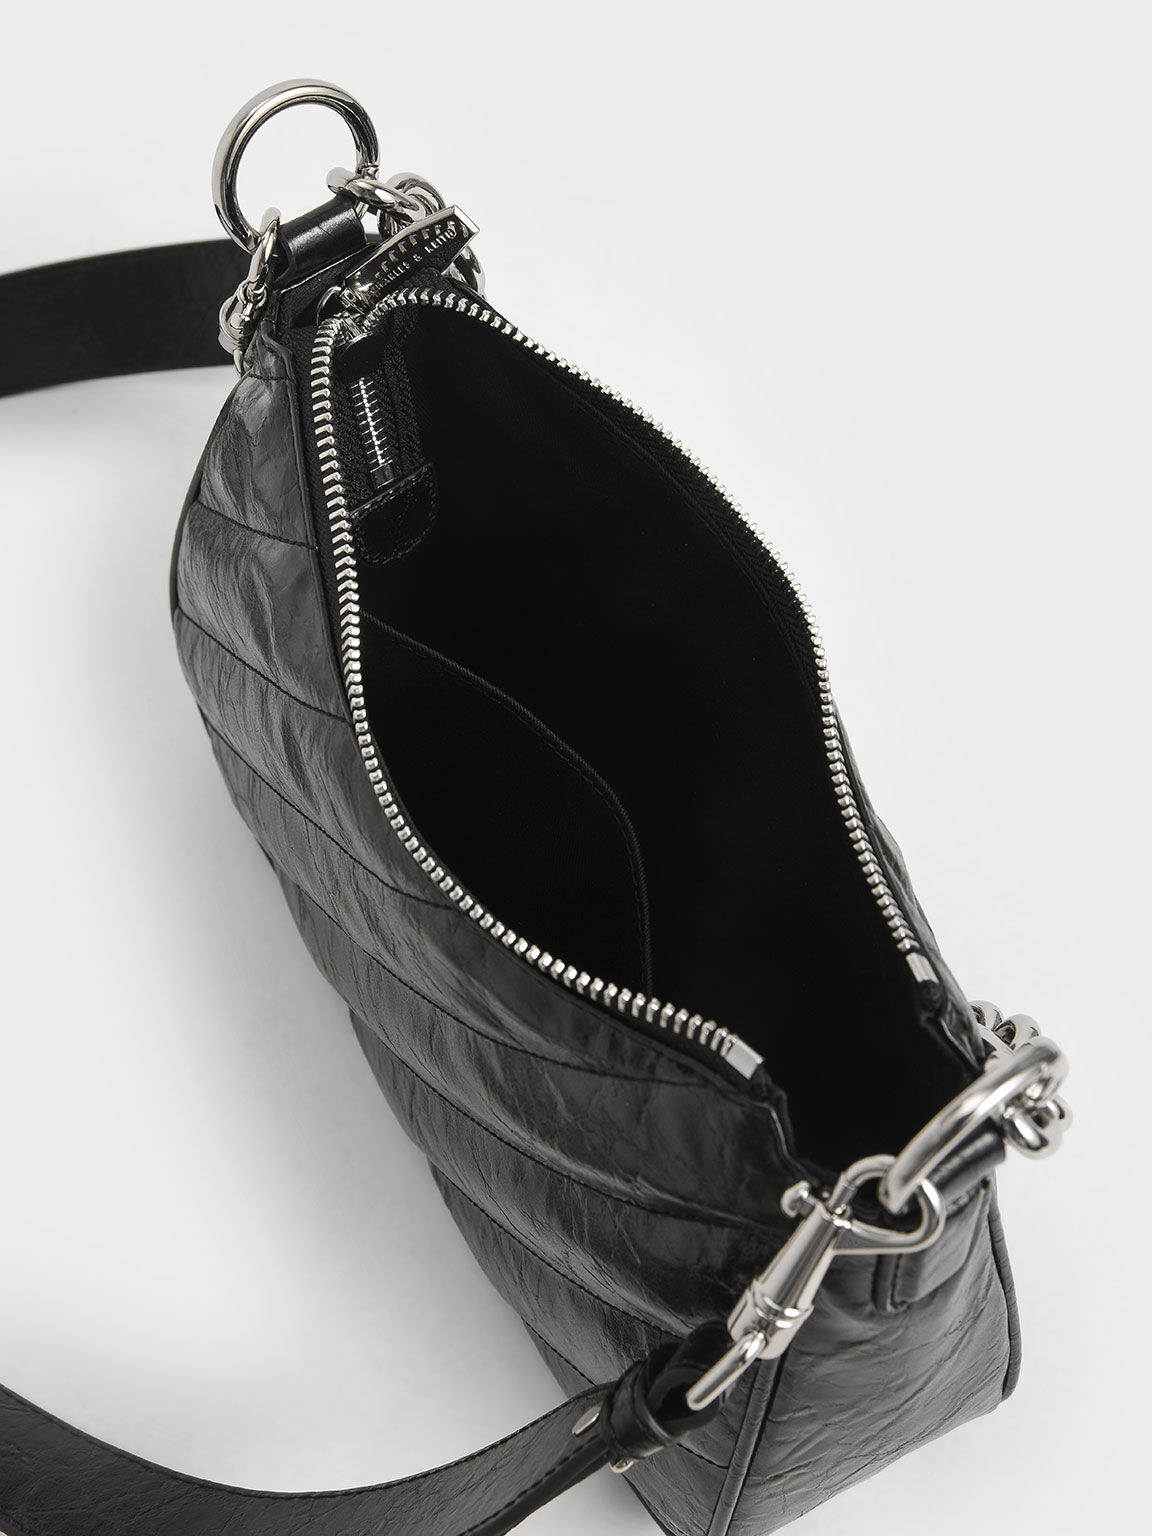 Panelled Chain Handle Crossbody Bag, Black, hi-res